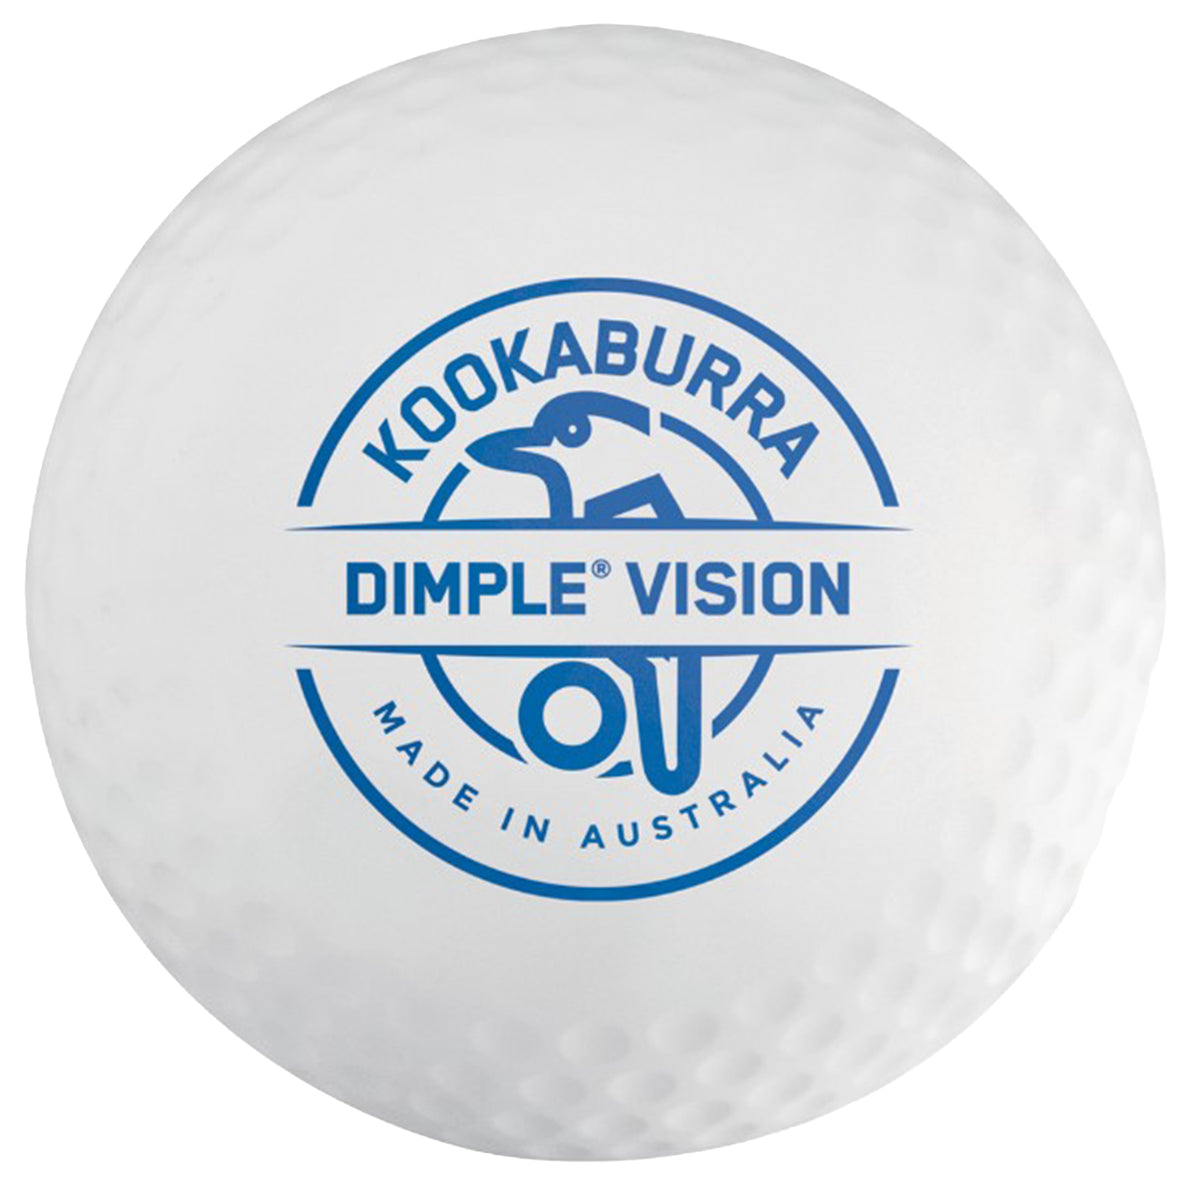 Kookaburra Dimple Vision Hockey Ball White